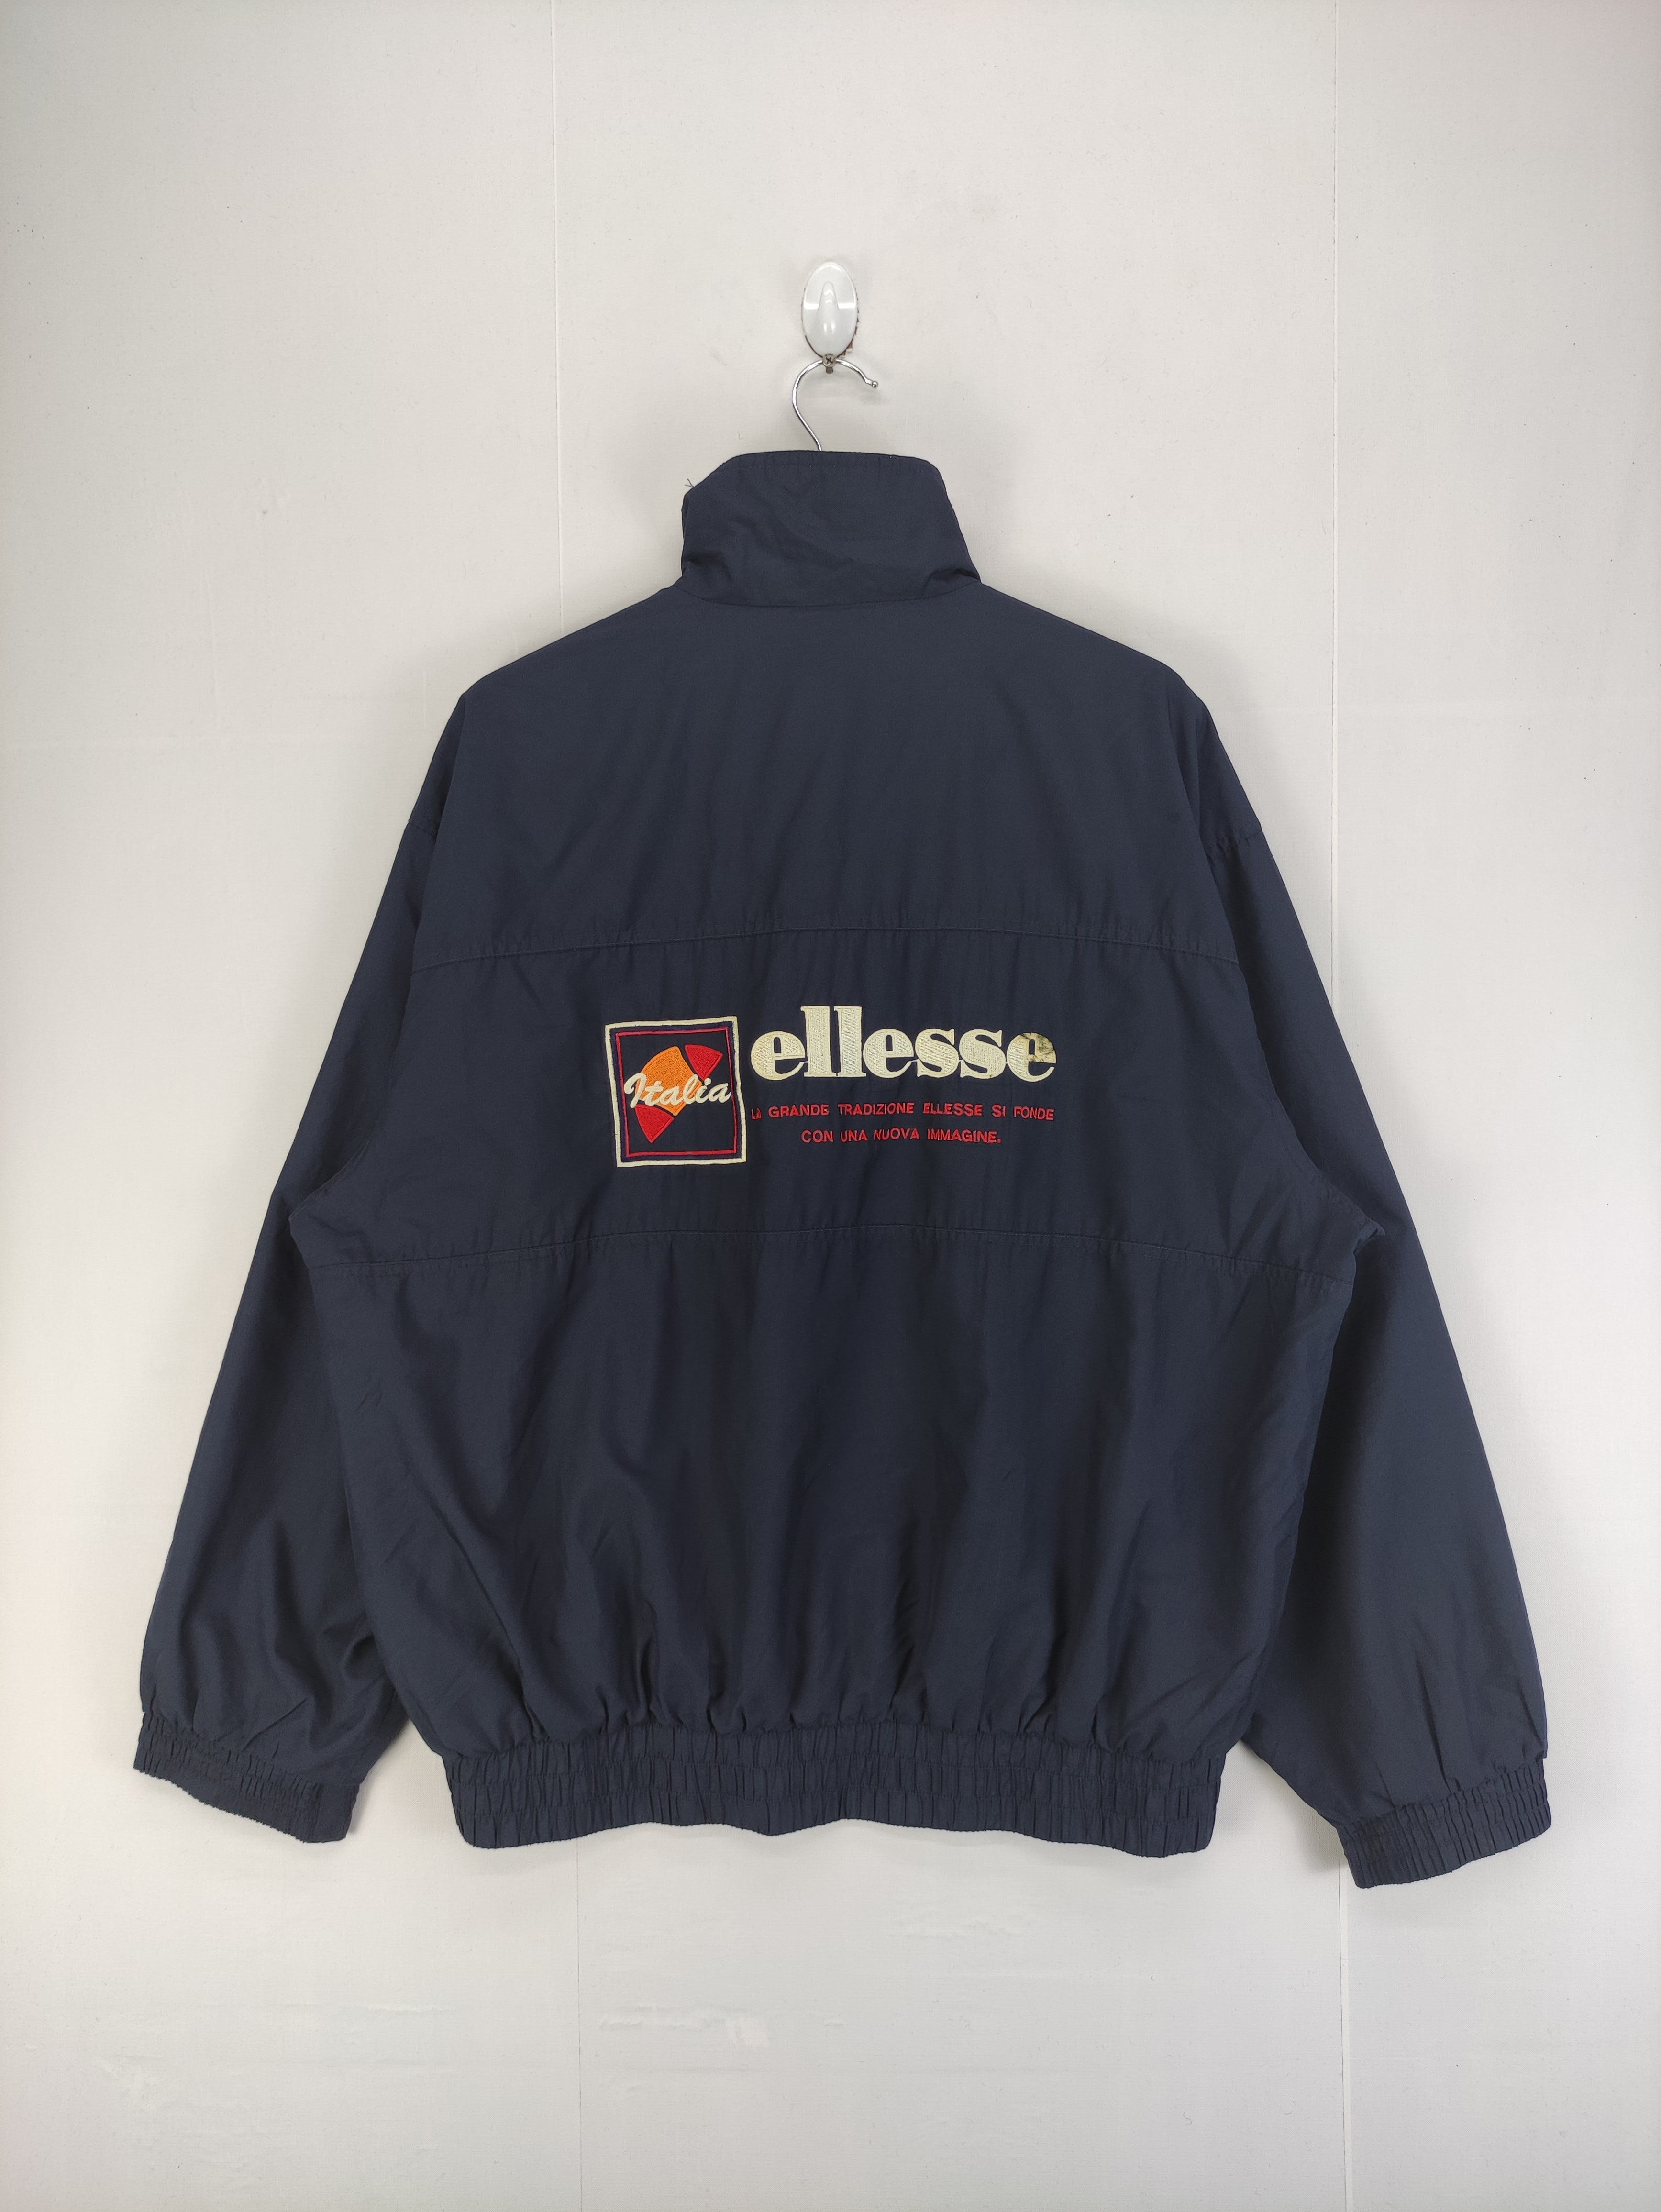 Vintage Ellesse Jacket Zipper - 10